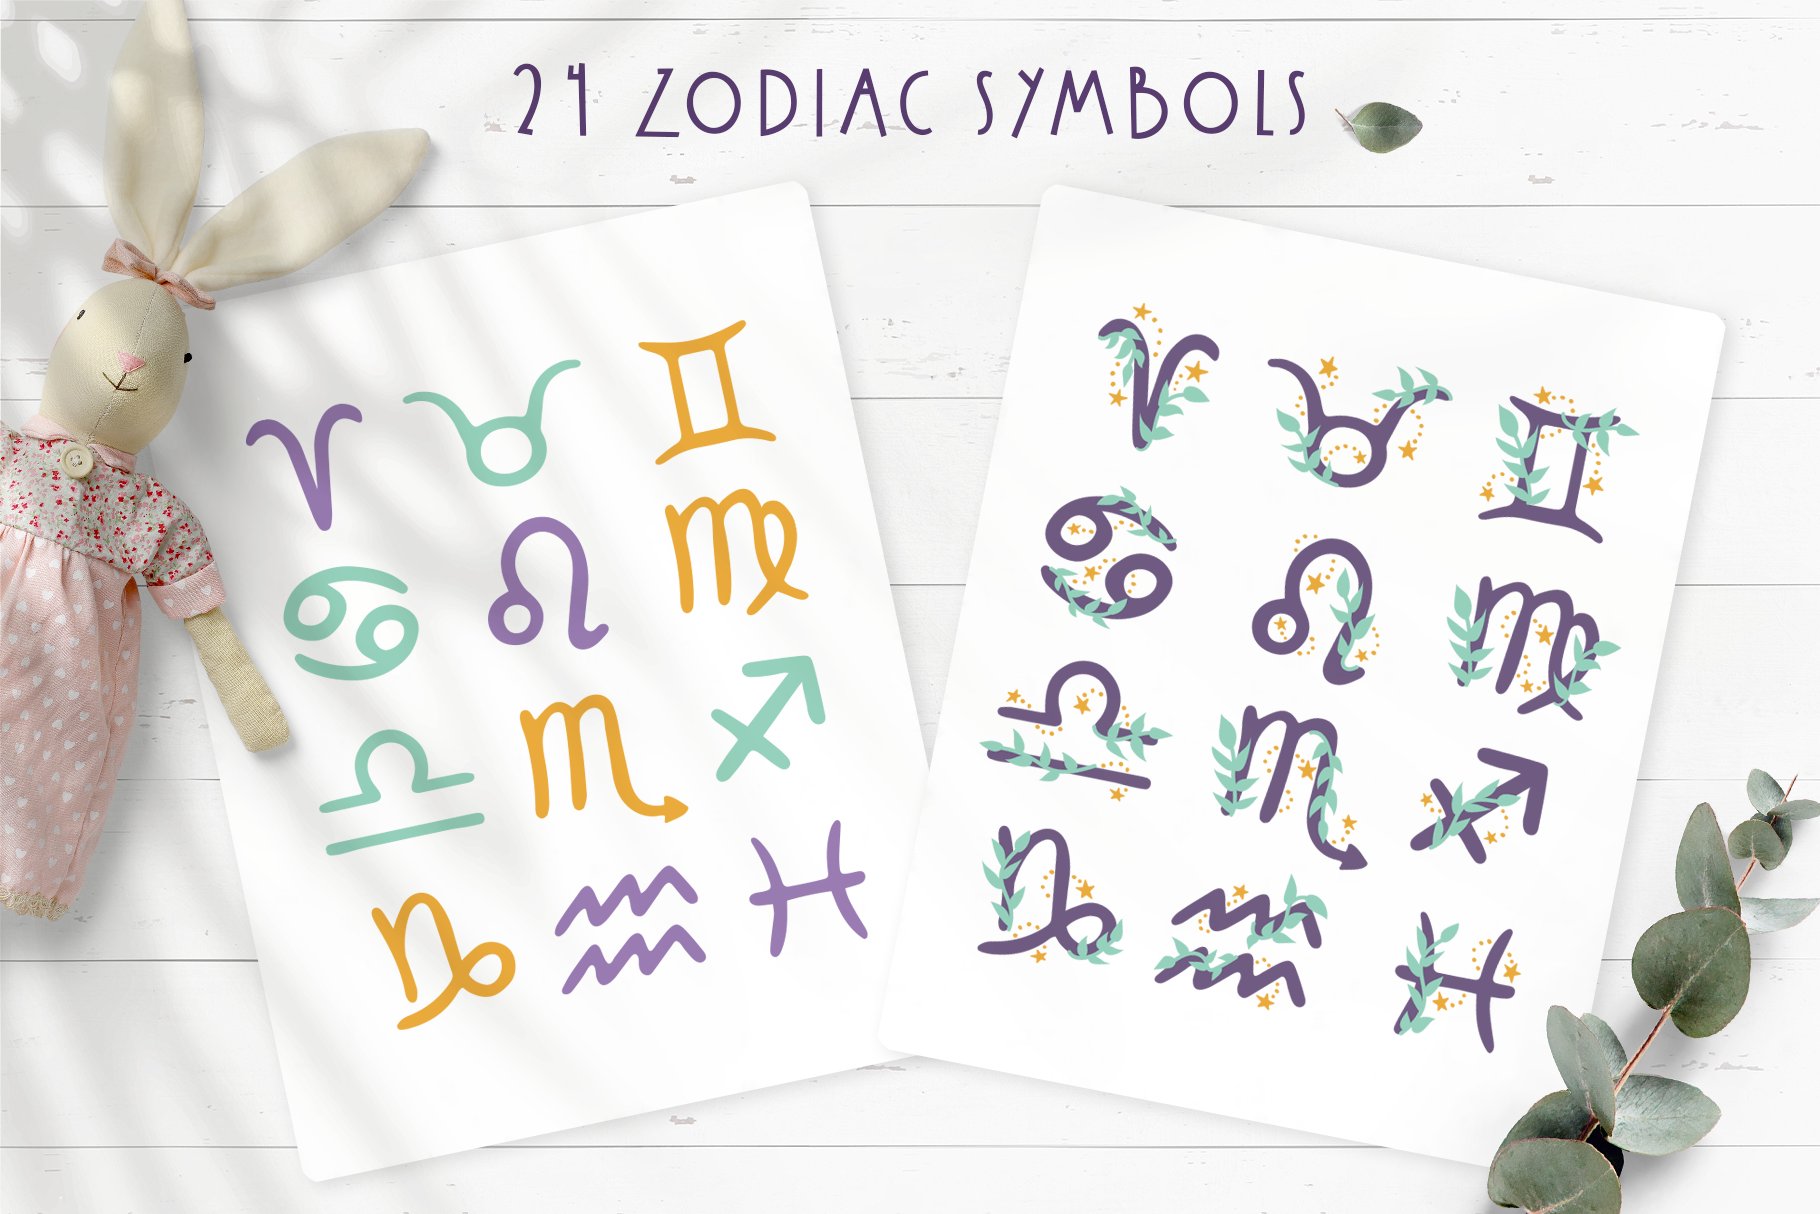 Some zodiac symbols in different colors.